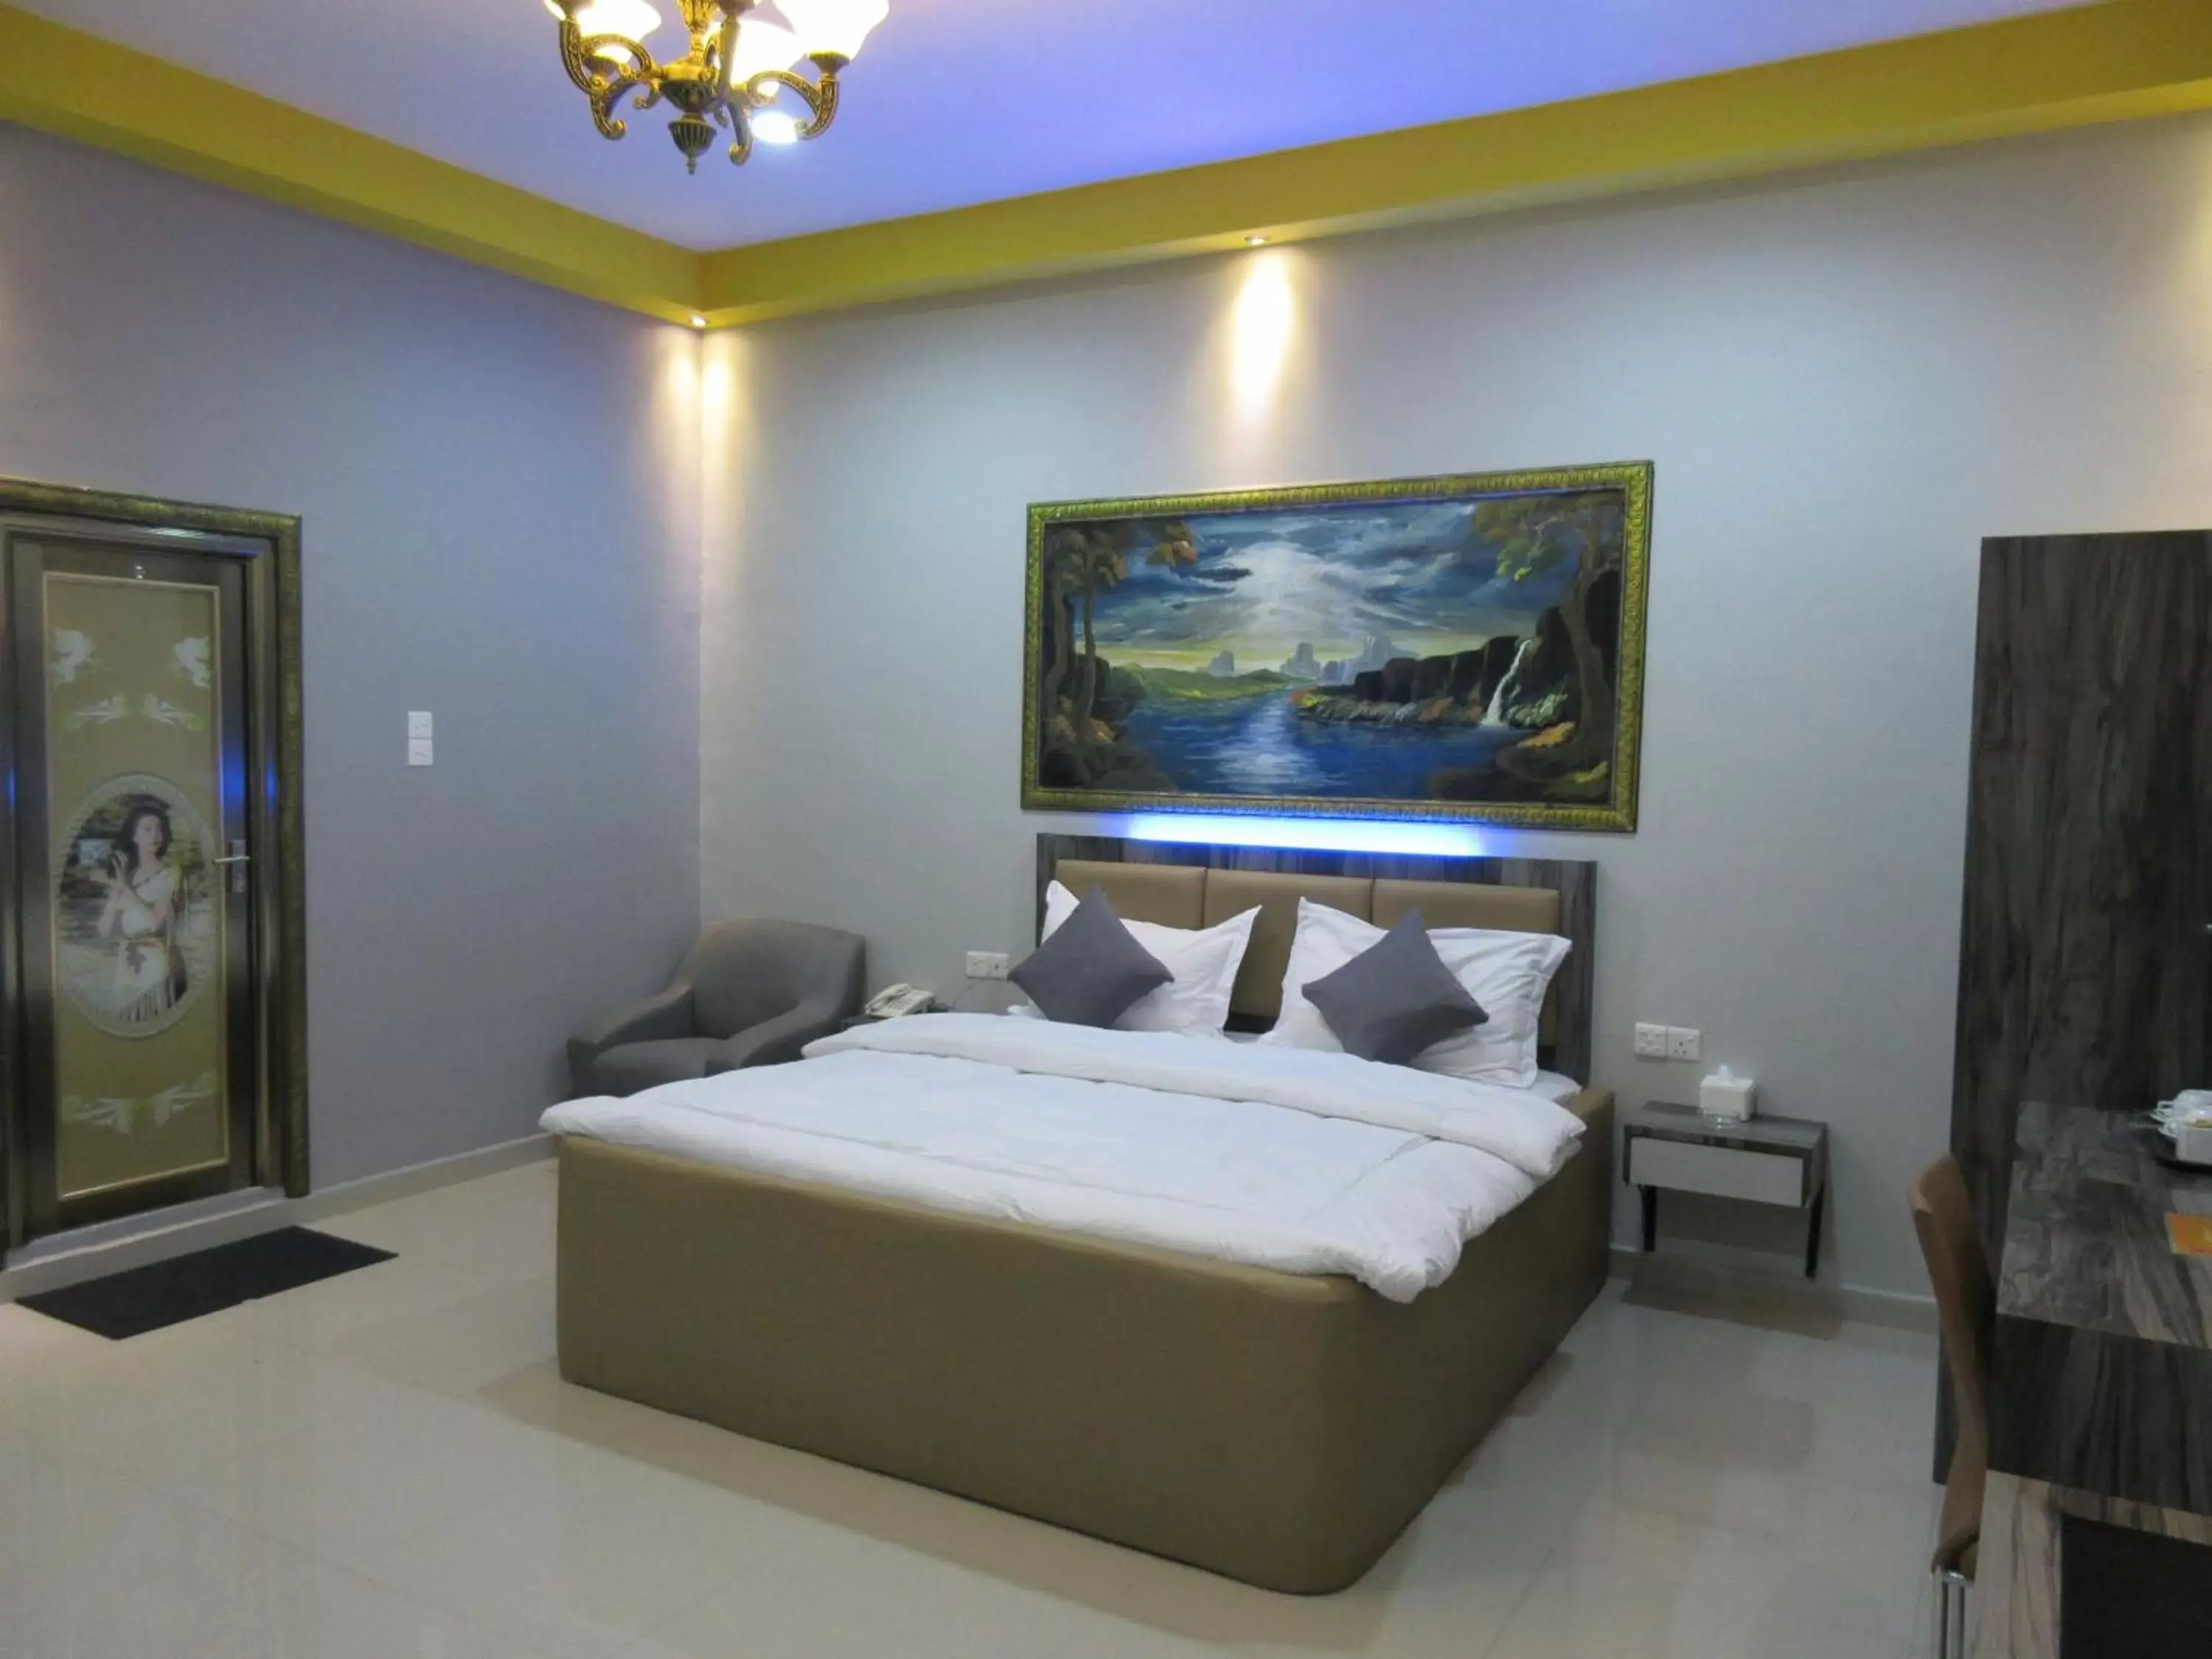 Bedroom, Room Photo in Hotel 01 Batam